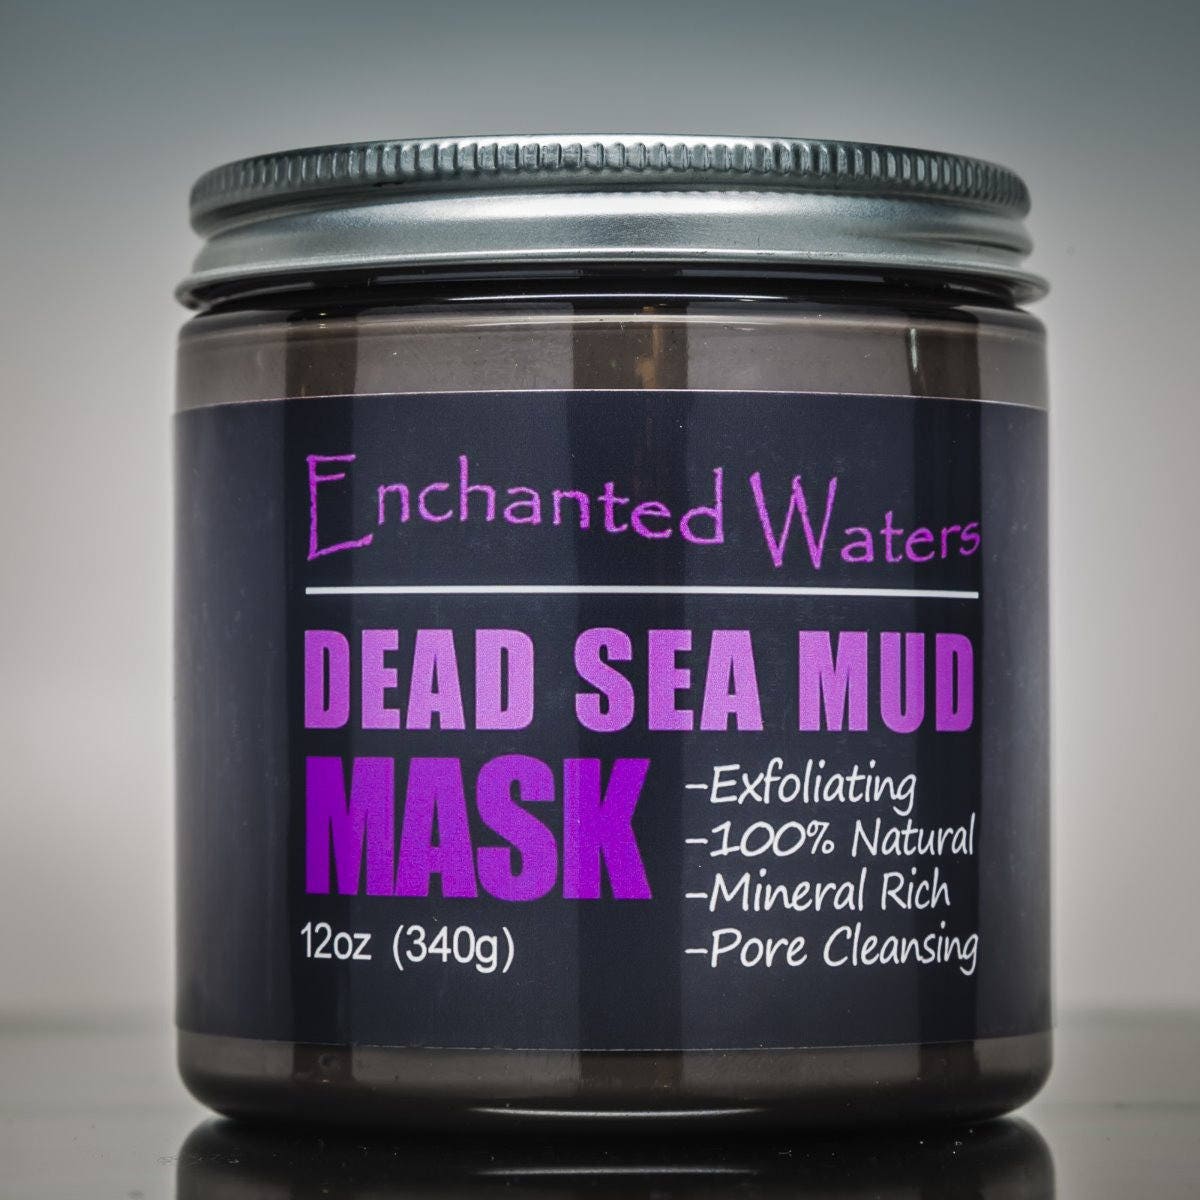 DEAD SEA MUD Mask 100% Pure Organic Facial Anti-aging image